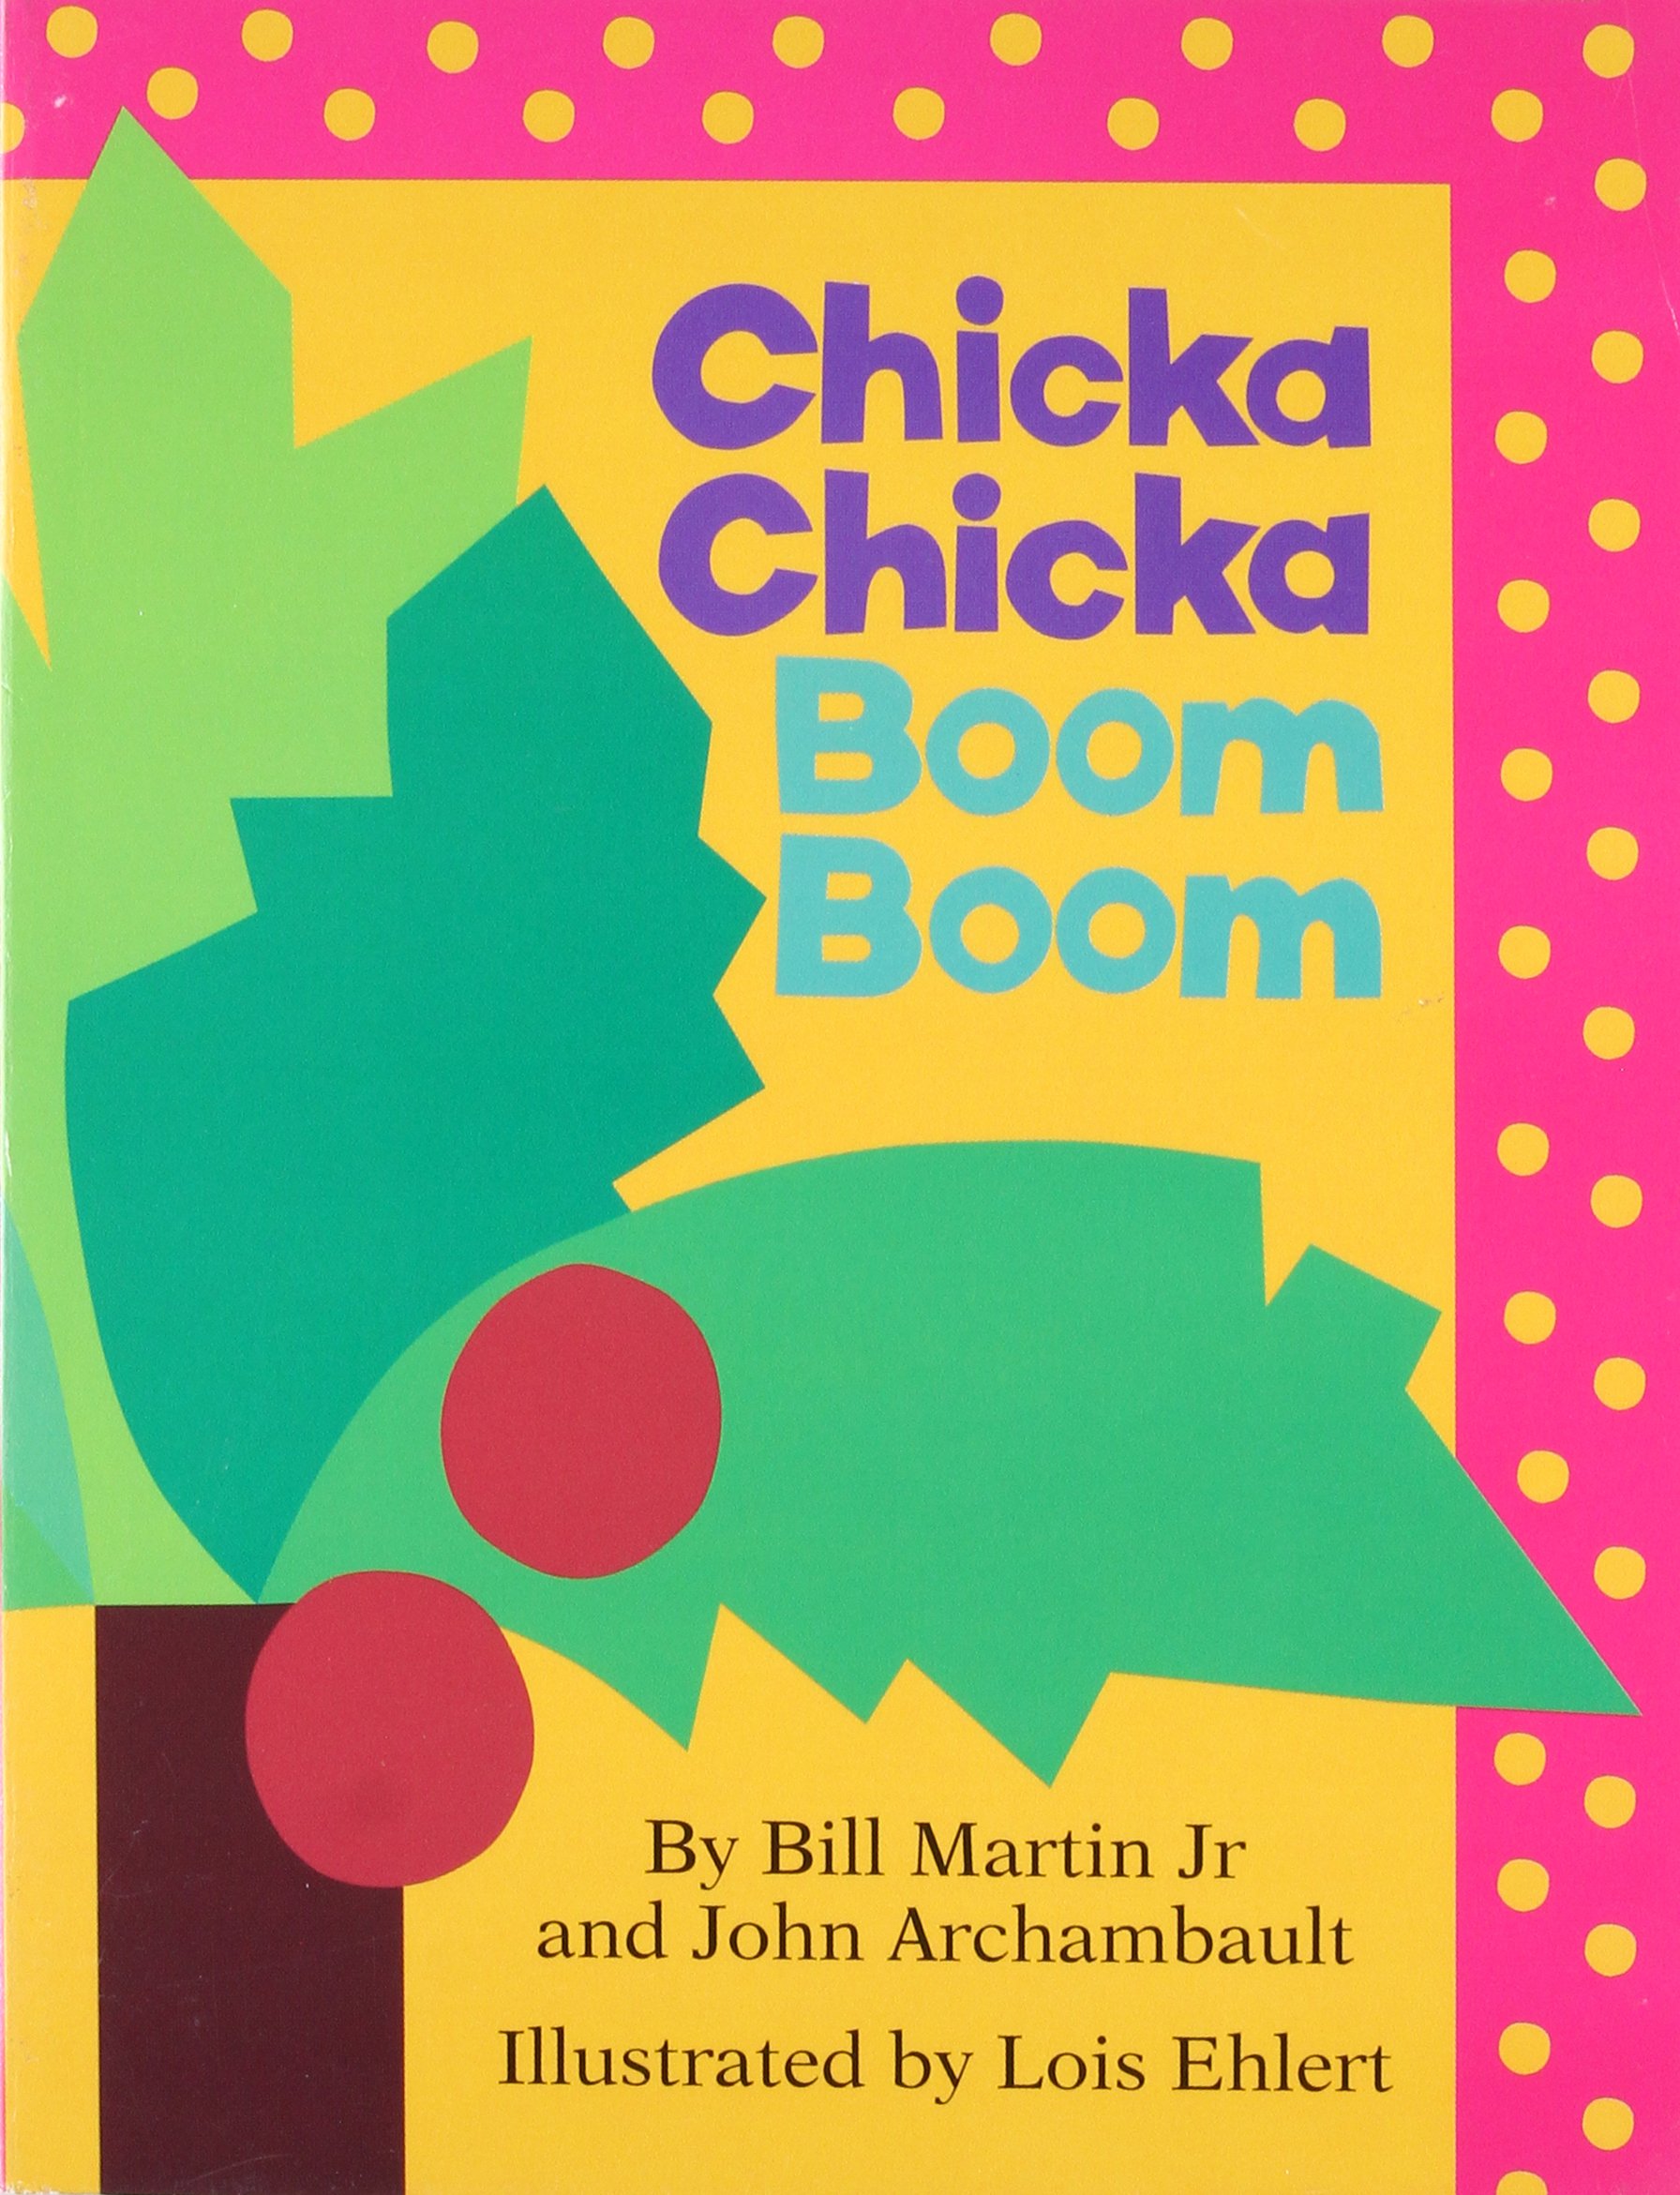 Chicka Chicka Boom Book Cover